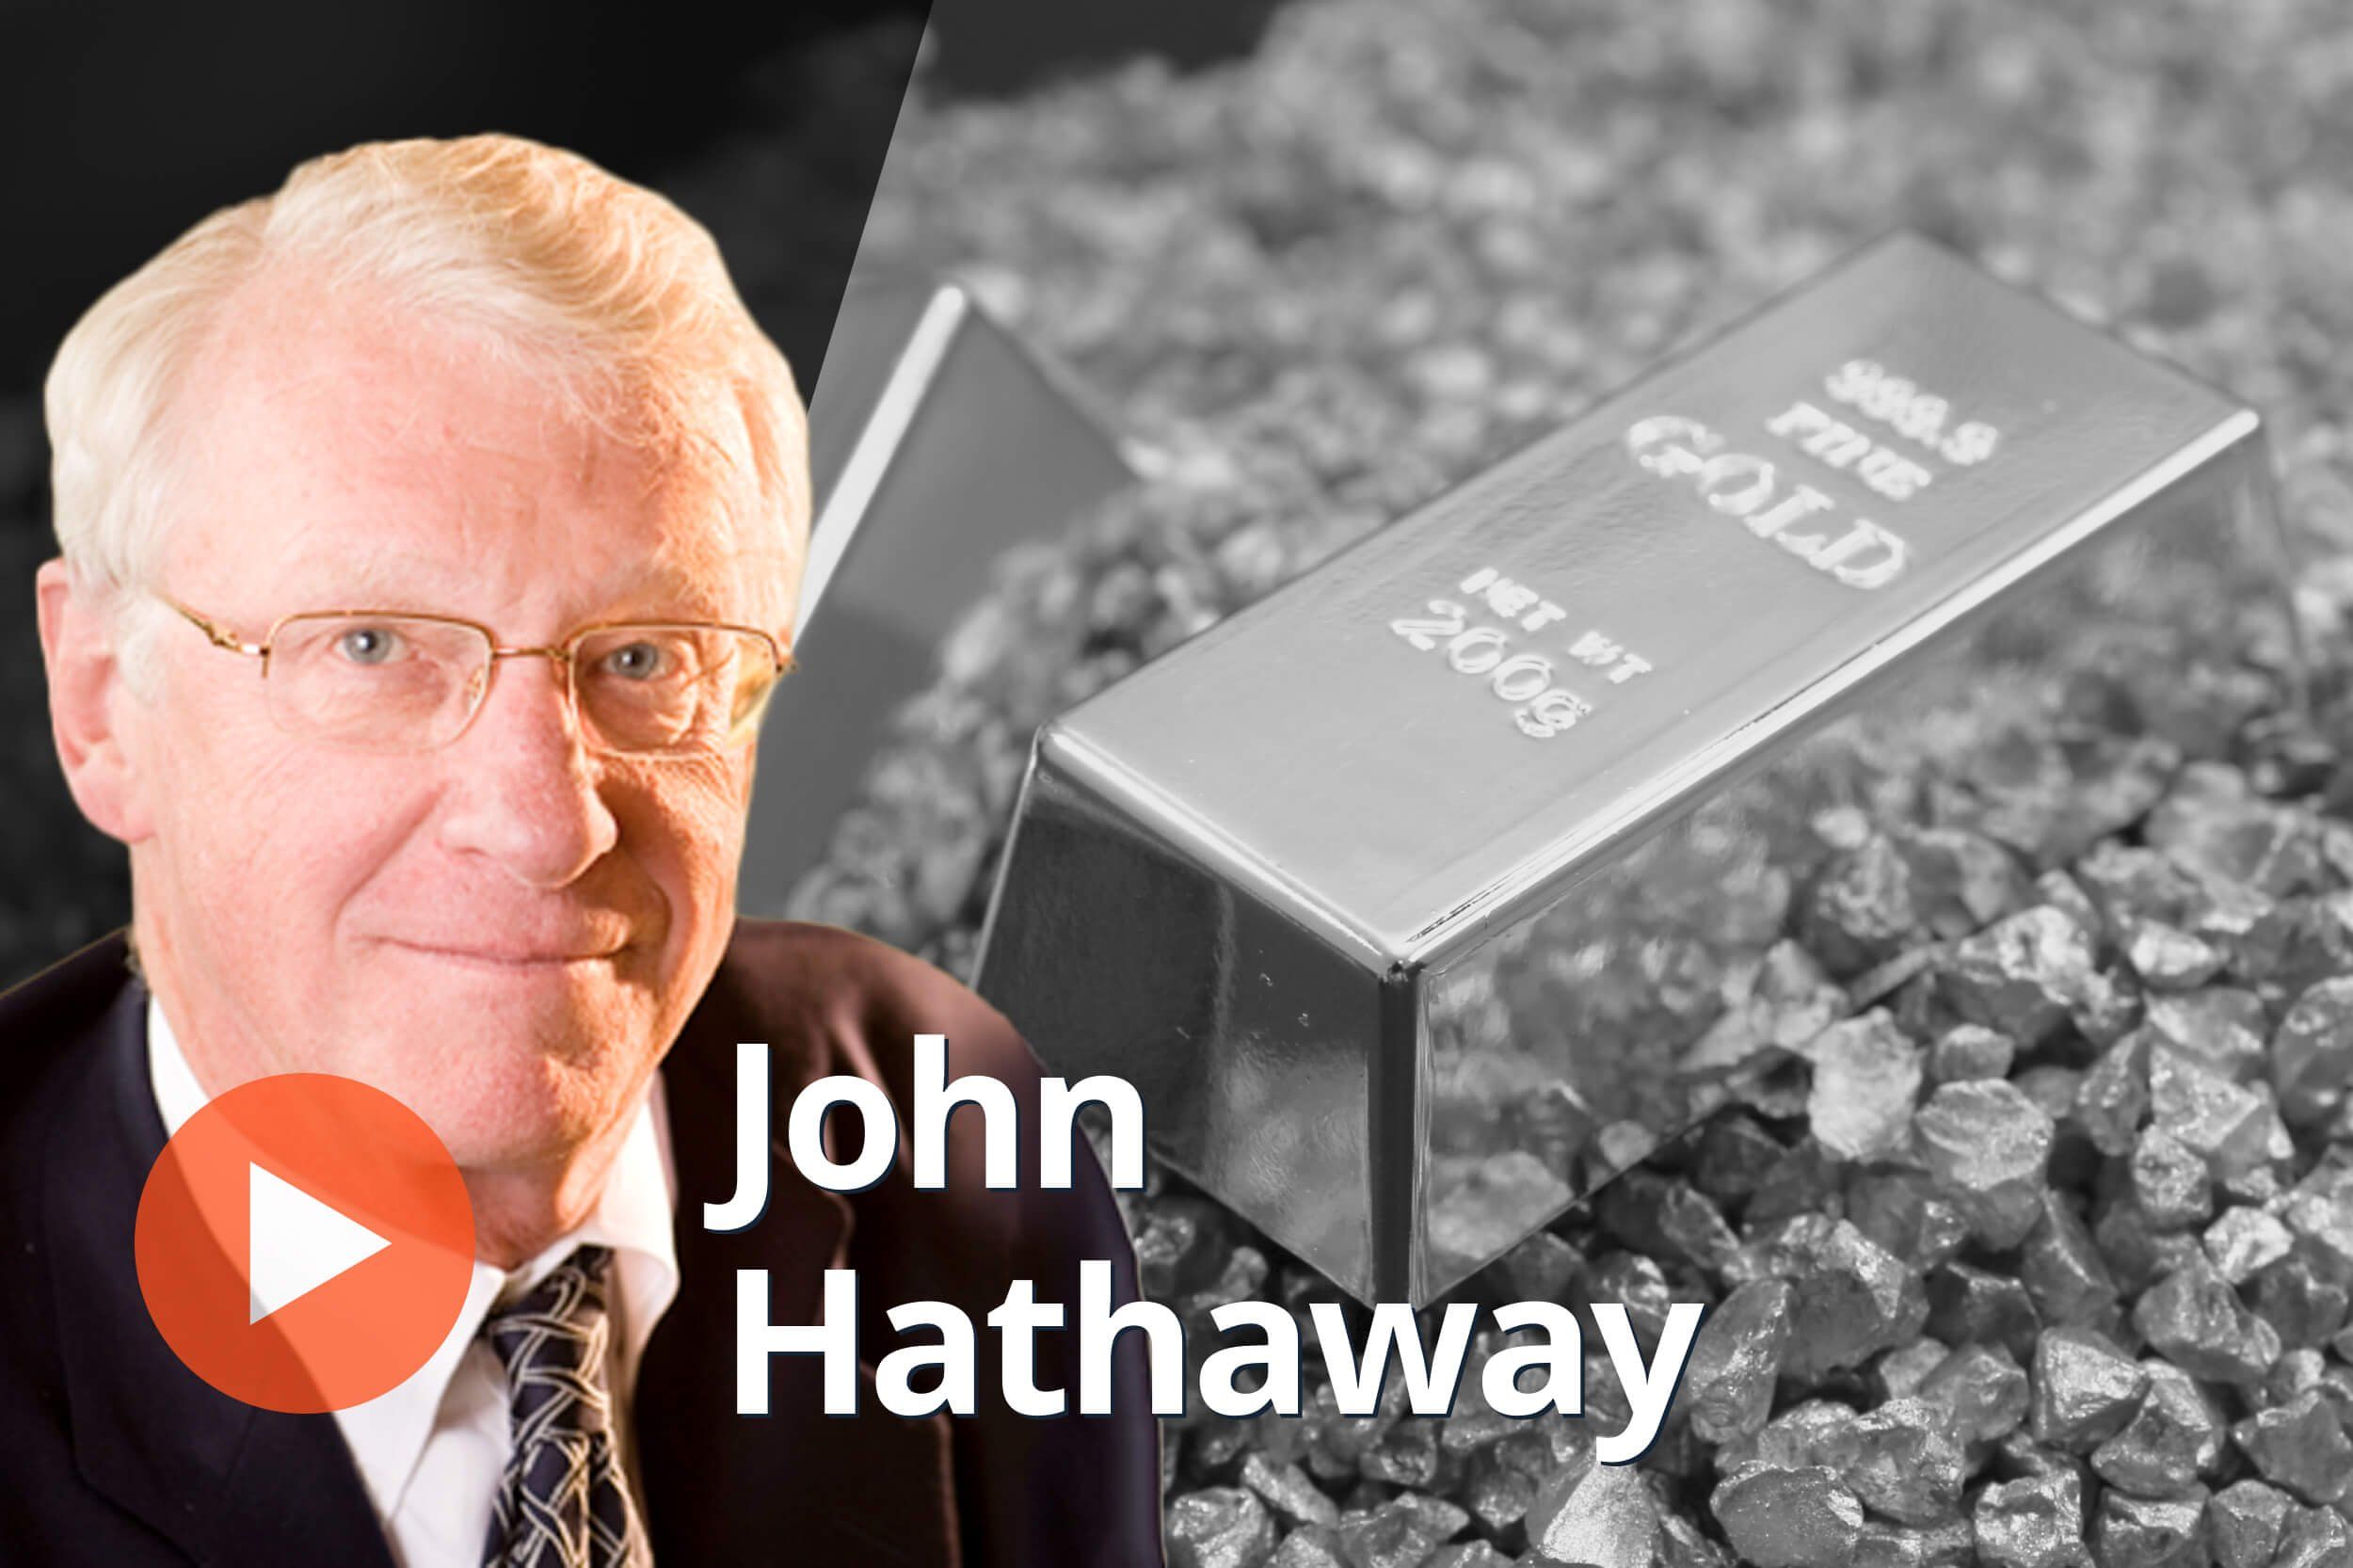 john hathaway, gold bars